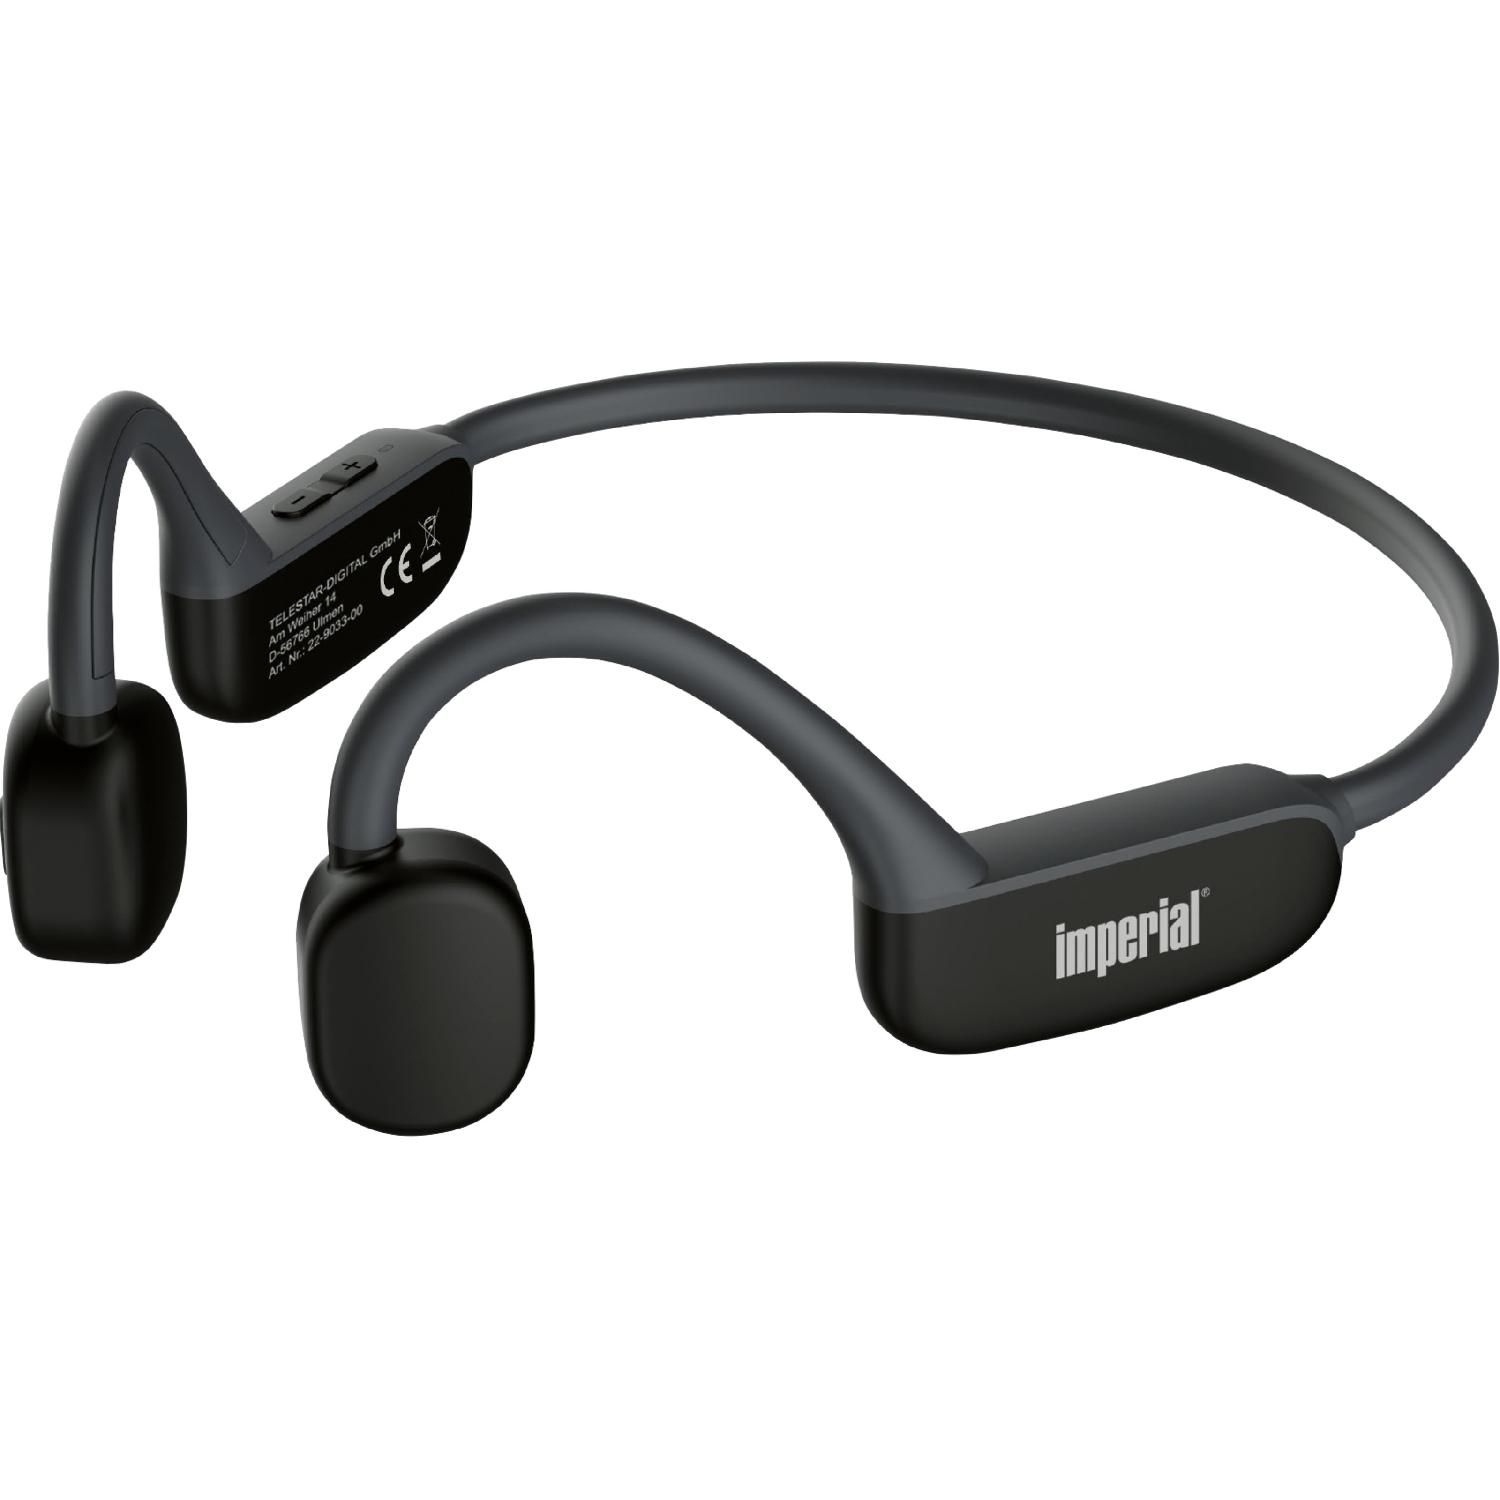 IMPERIAL bluTC 1, Neckband schwarz active Headset